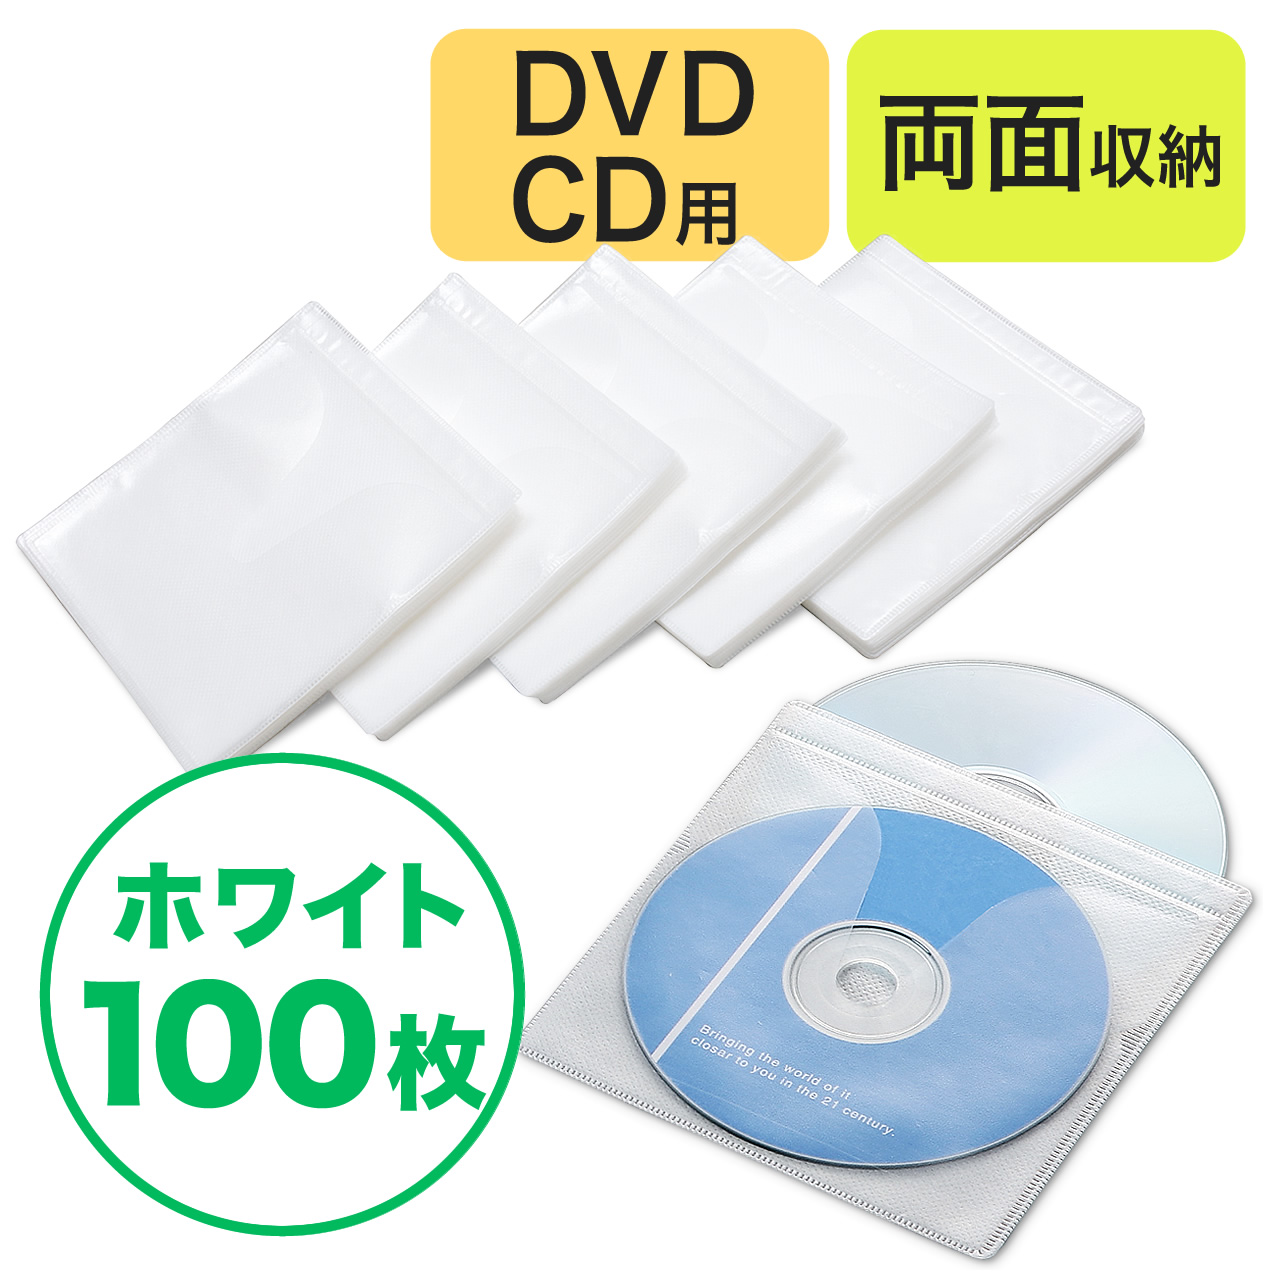 Cd Dvd用不織布ケース 両面収納 ホワイト 200 Fcd008whの販売商品